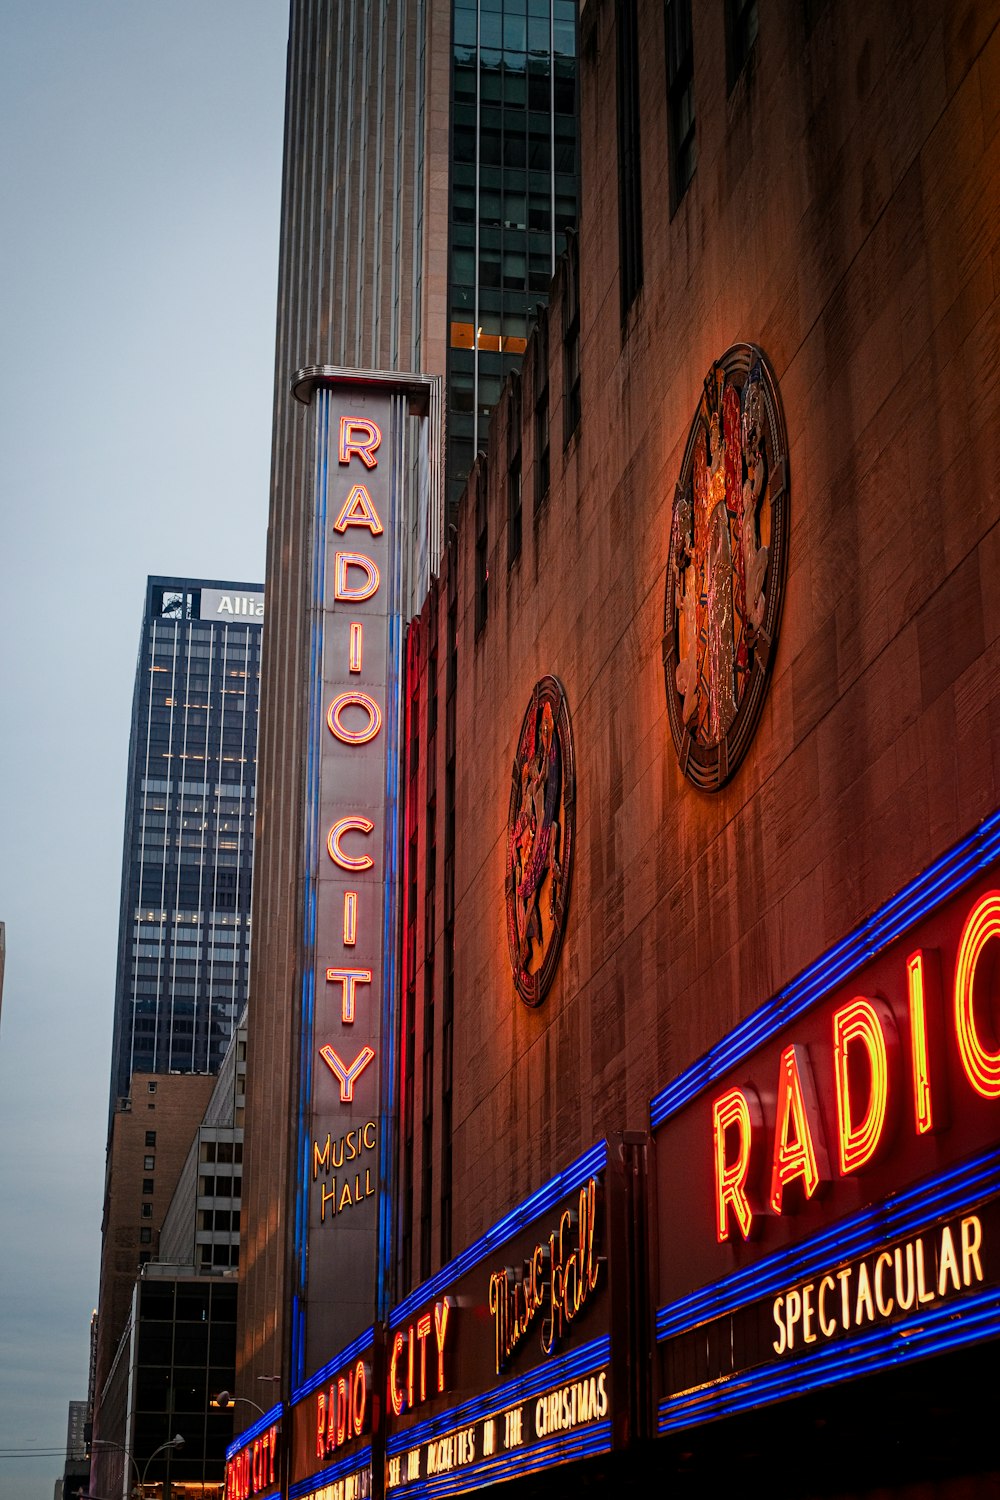 the radio city radio building is lit up at night